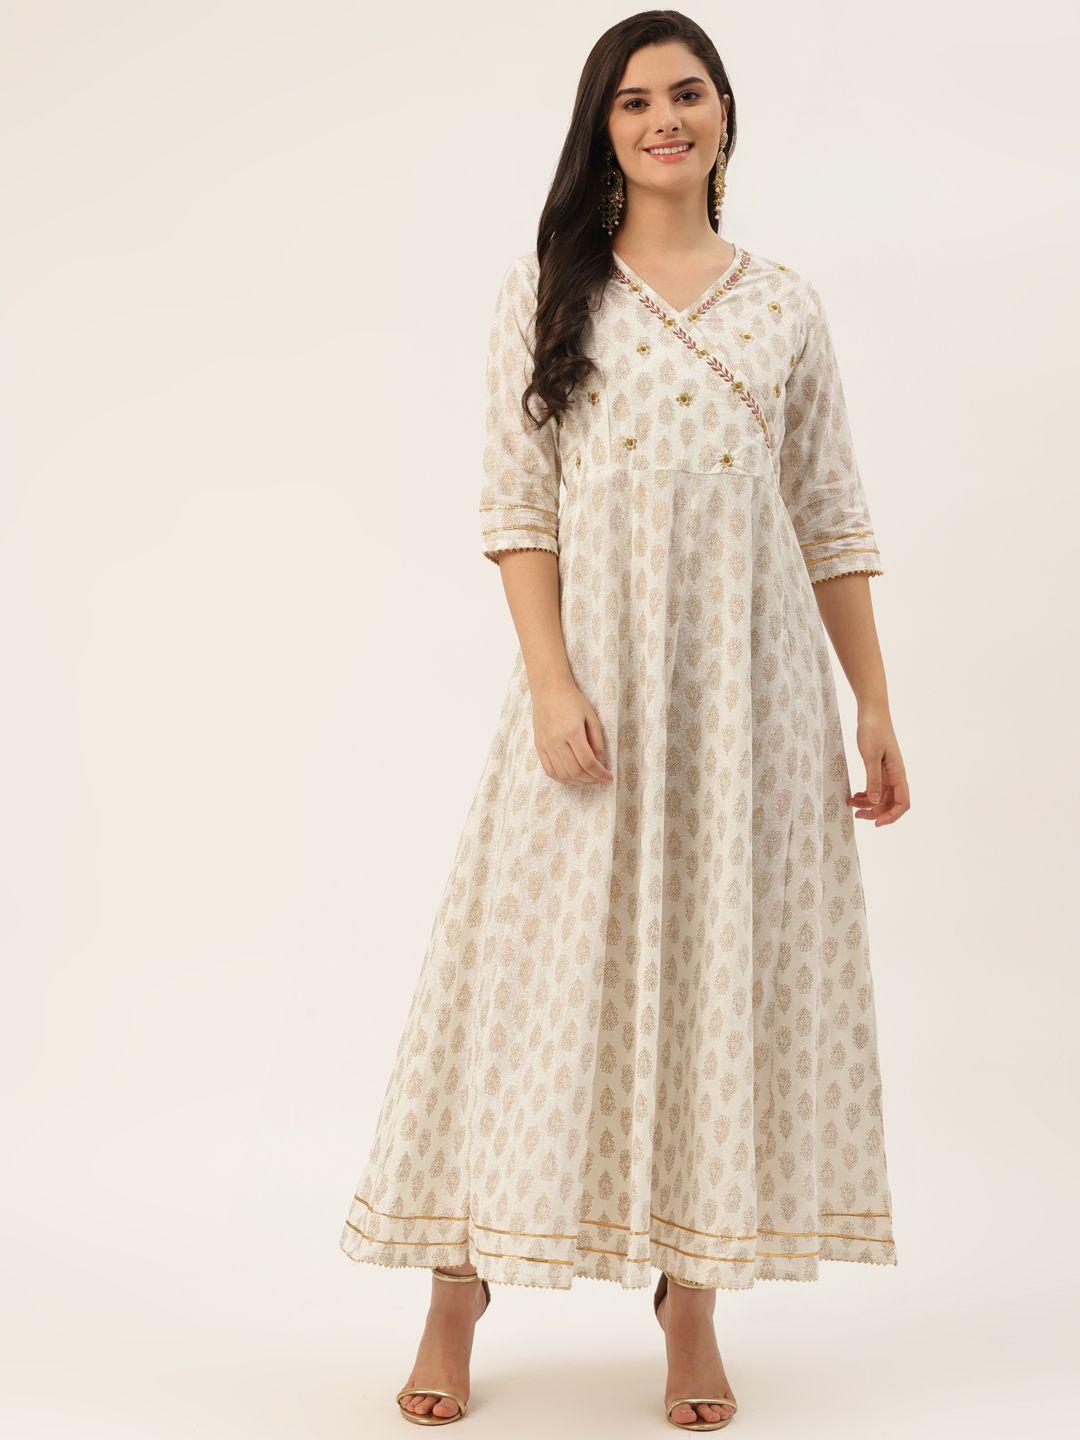 here&now-off-white-cotton-ethnic-motifs-ethnic-maxi-ethnic-dress